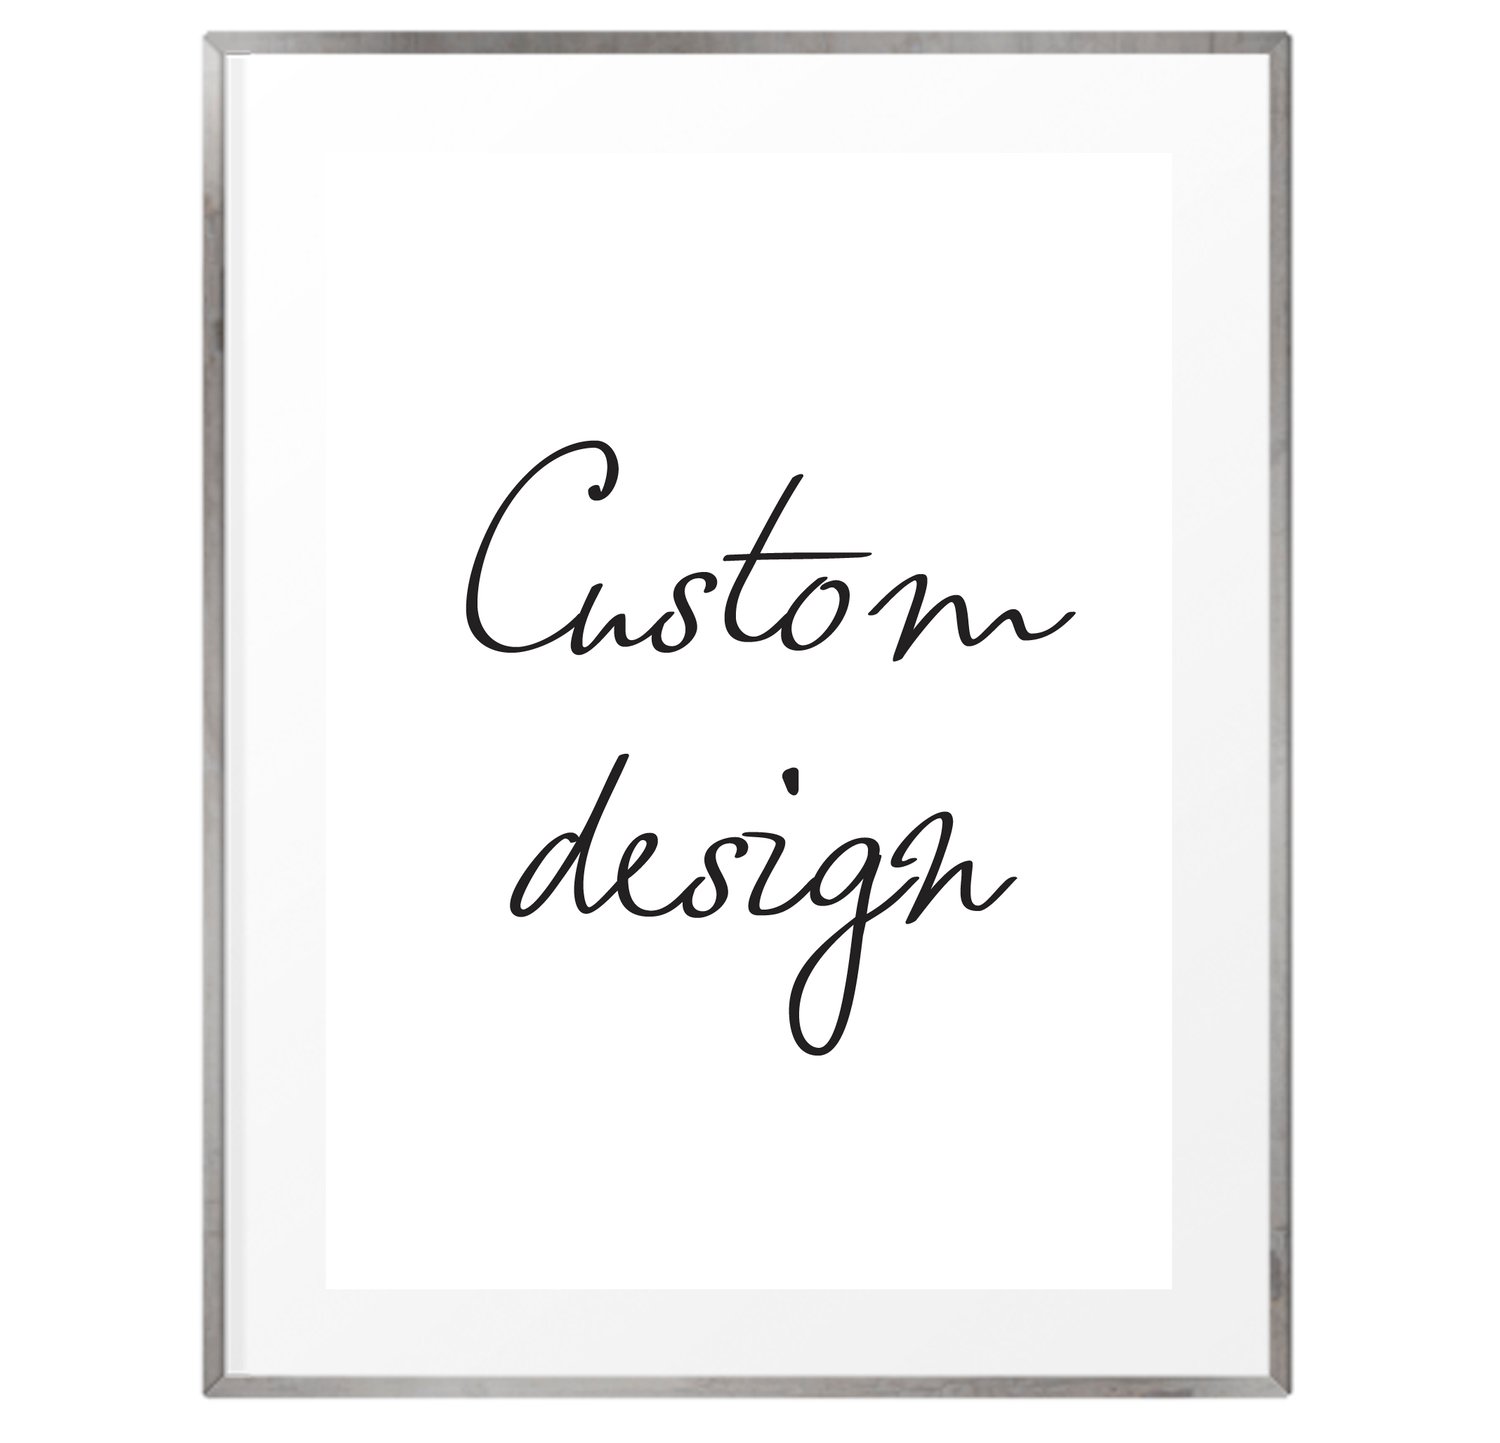 Image of Custom designed prints and signage